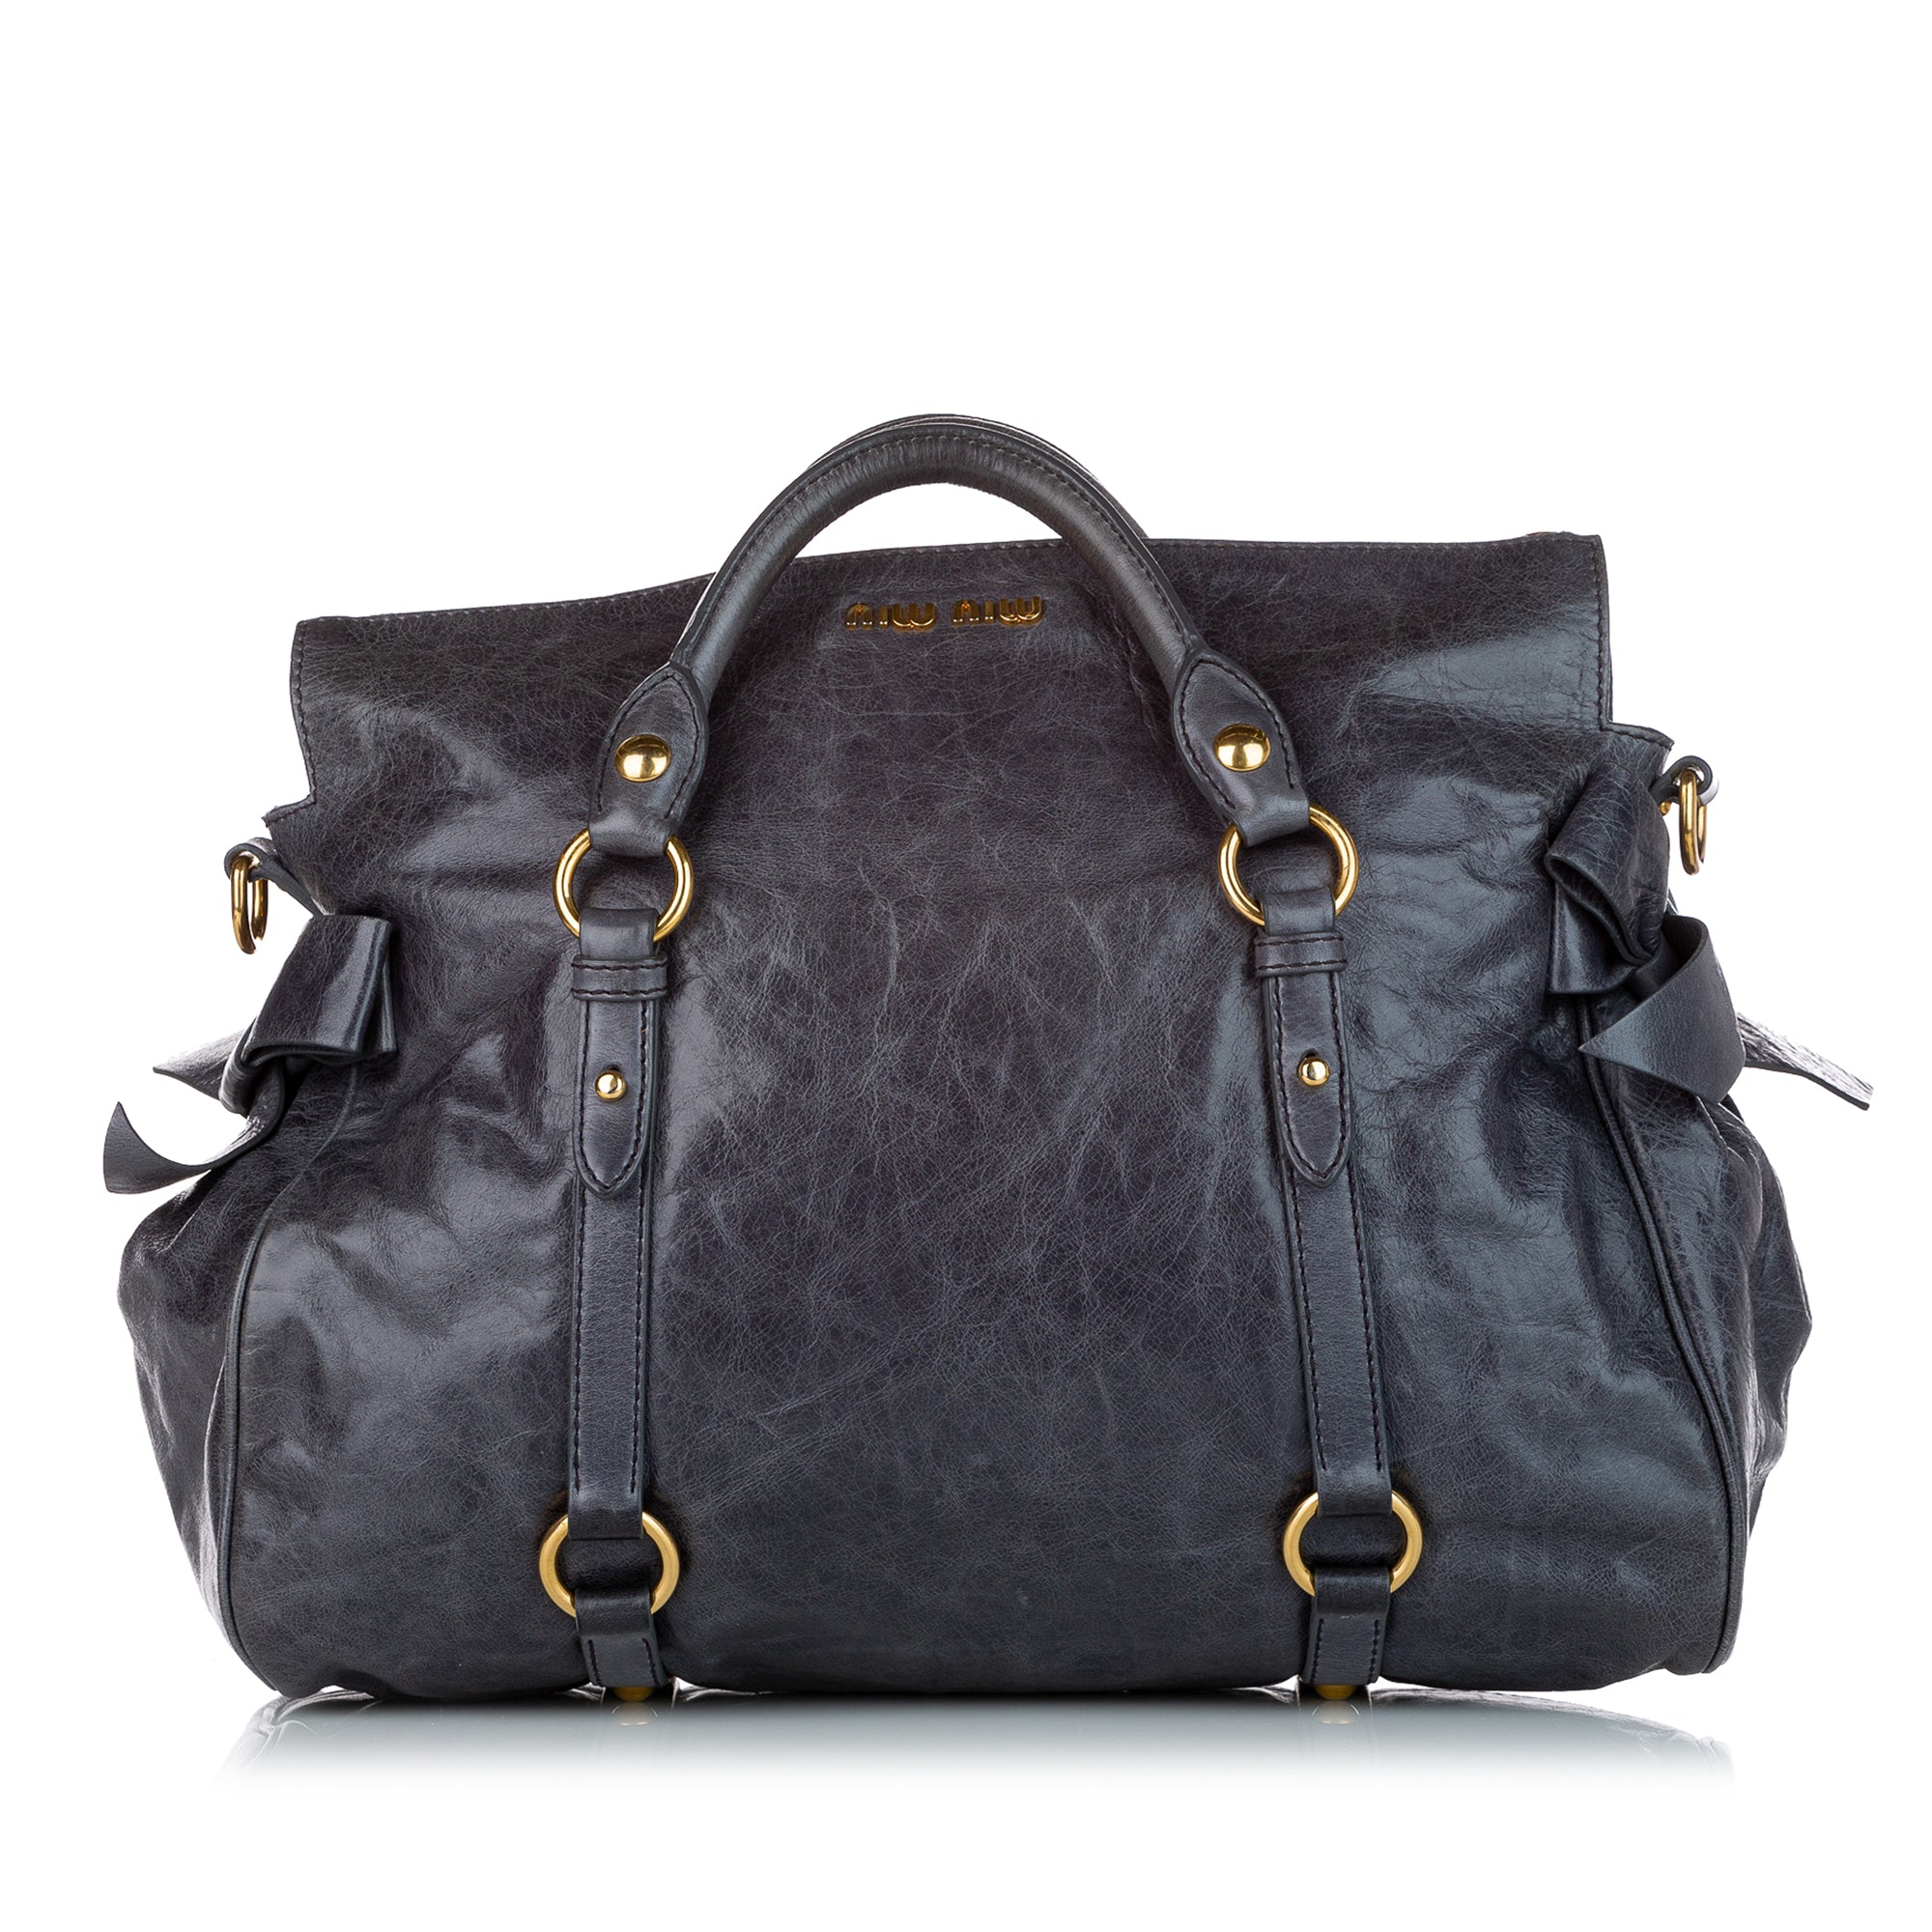 Miu Miu Prada Bow Vitello Lux Medium Calfskin Leather Satchel, Black, Bow  bag